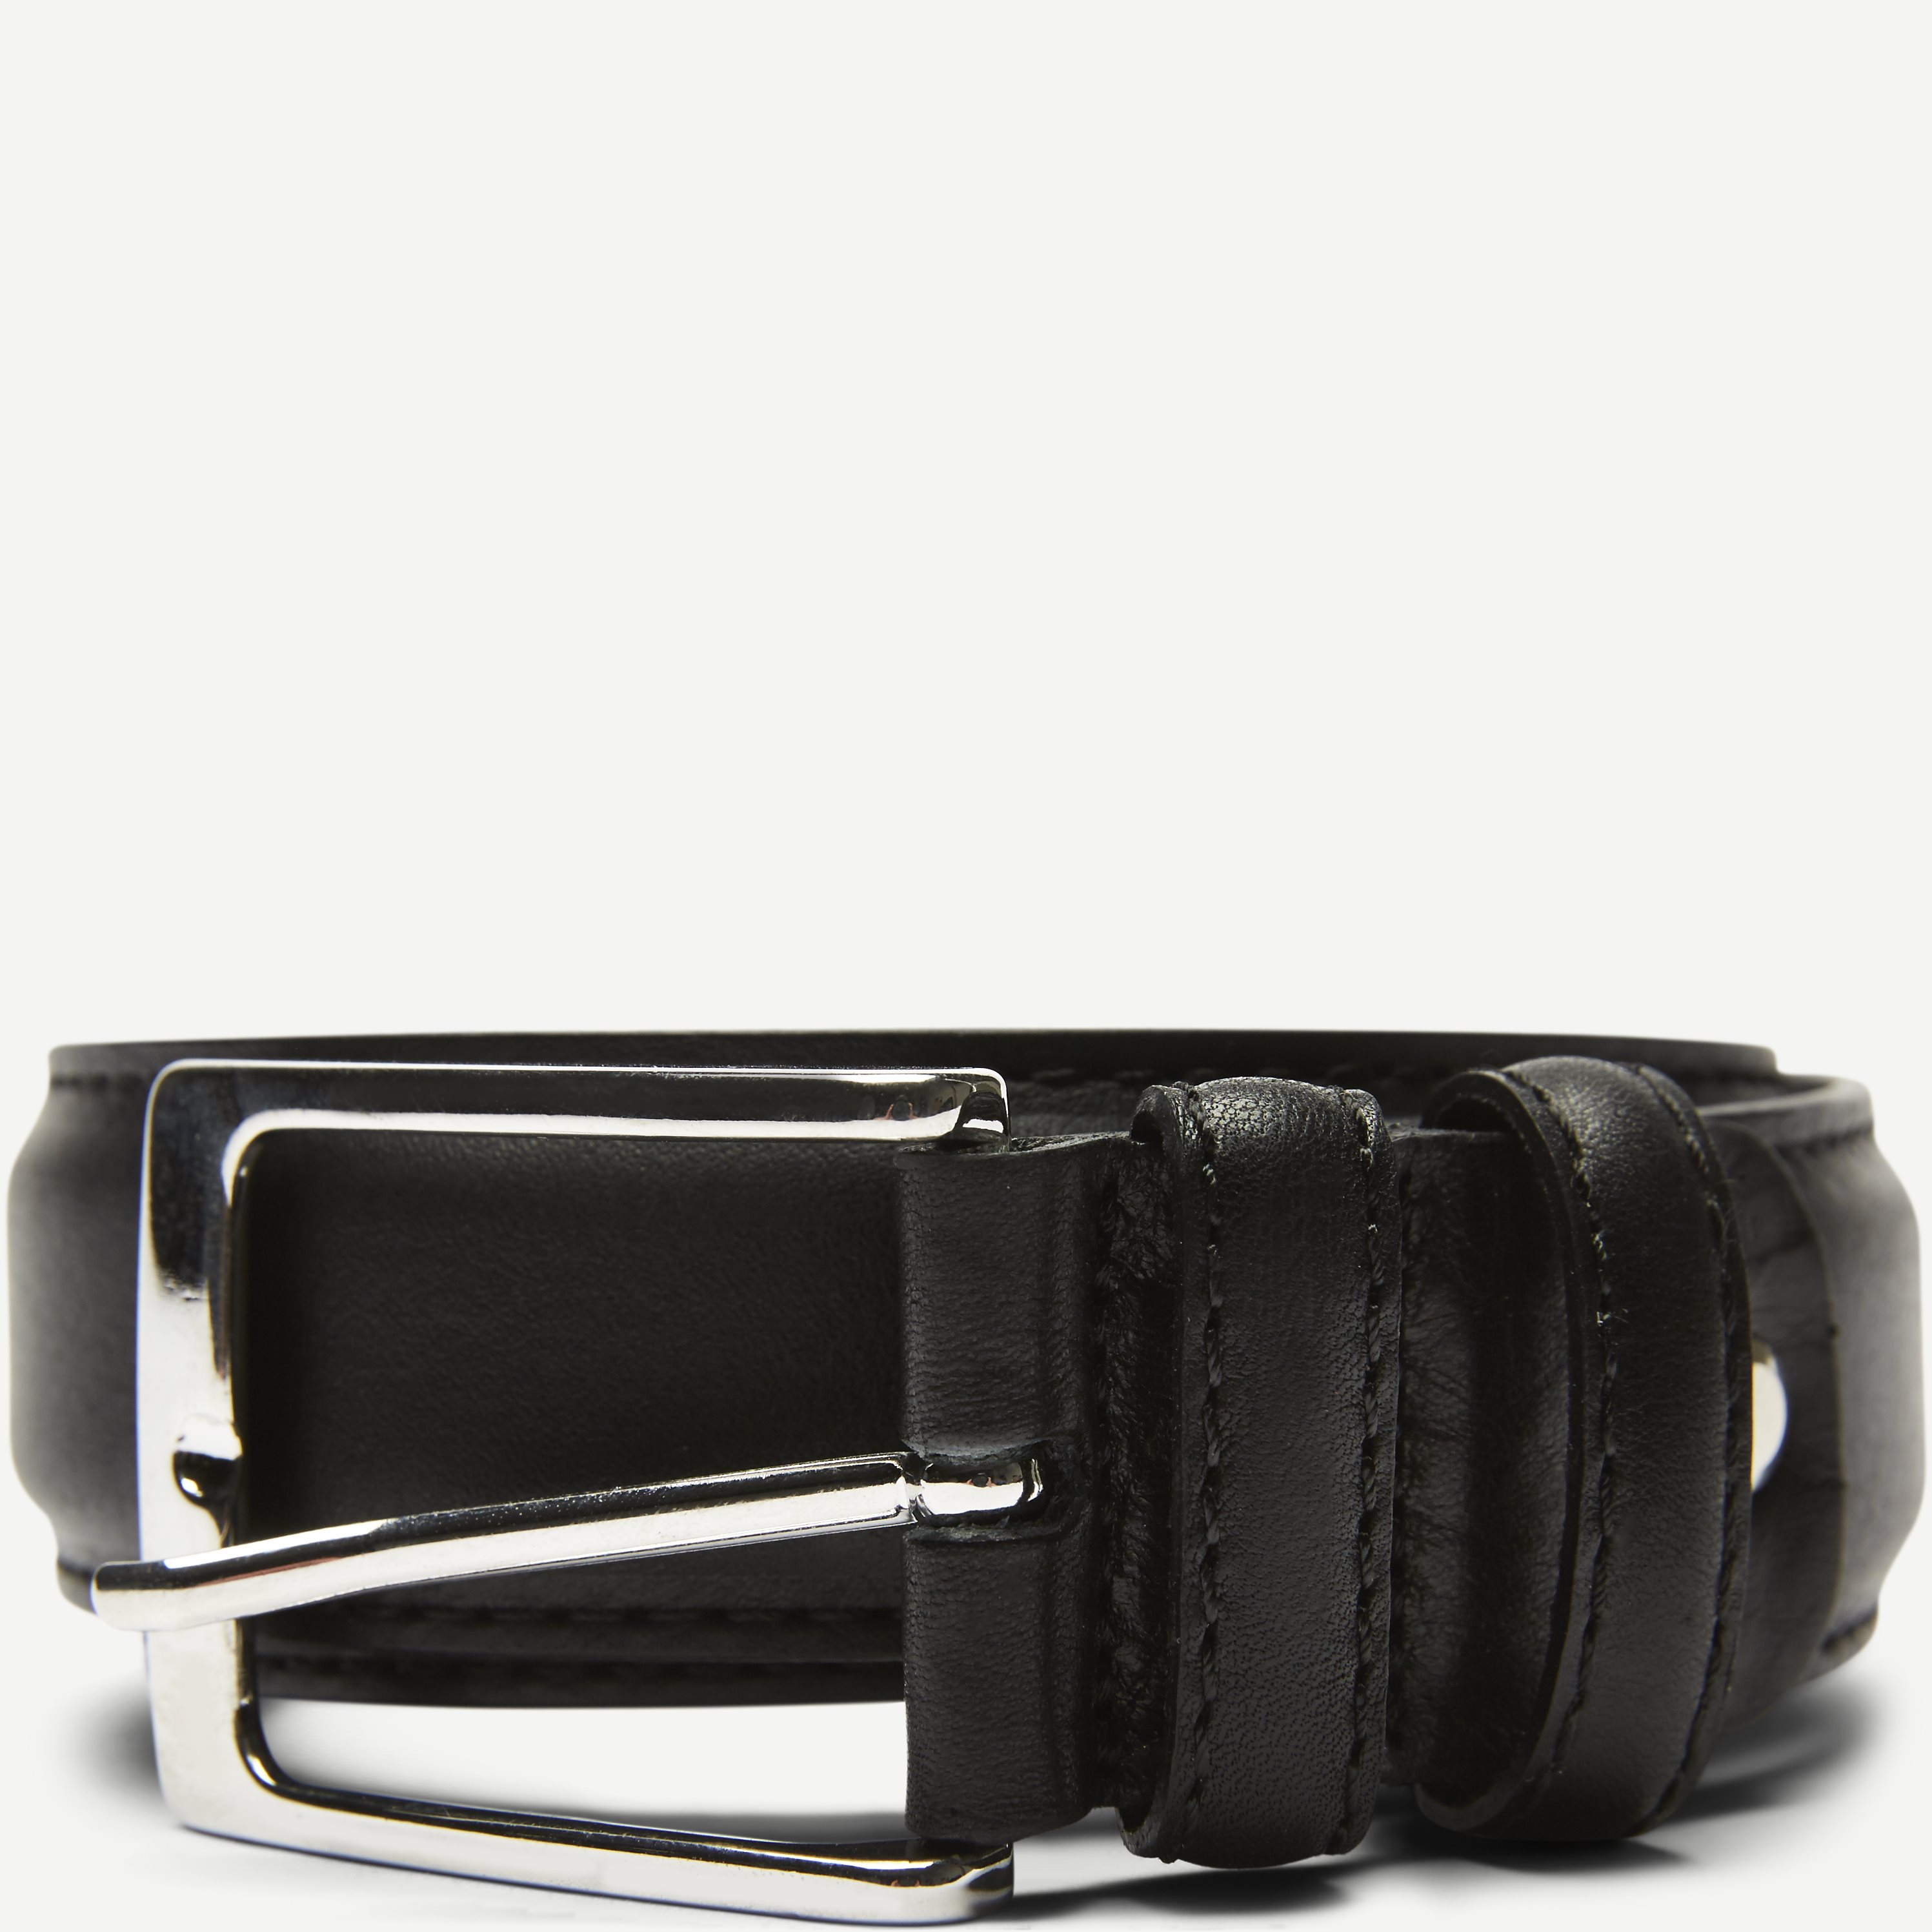 Philipsons Belts 15025 Black